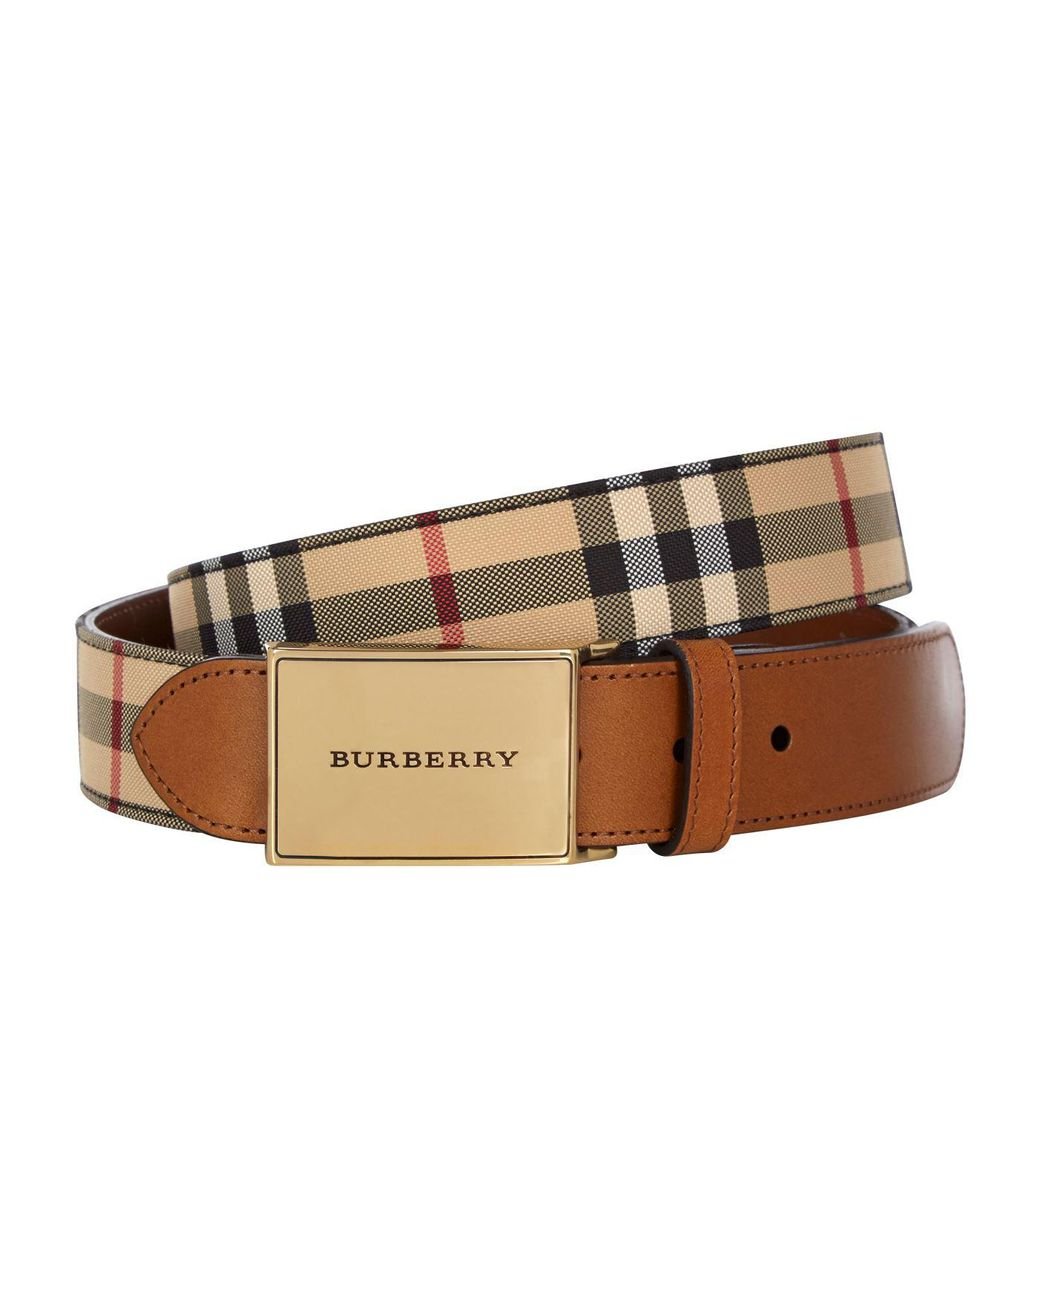 Burberry Men's Plaque Buckle Check Leather Belt